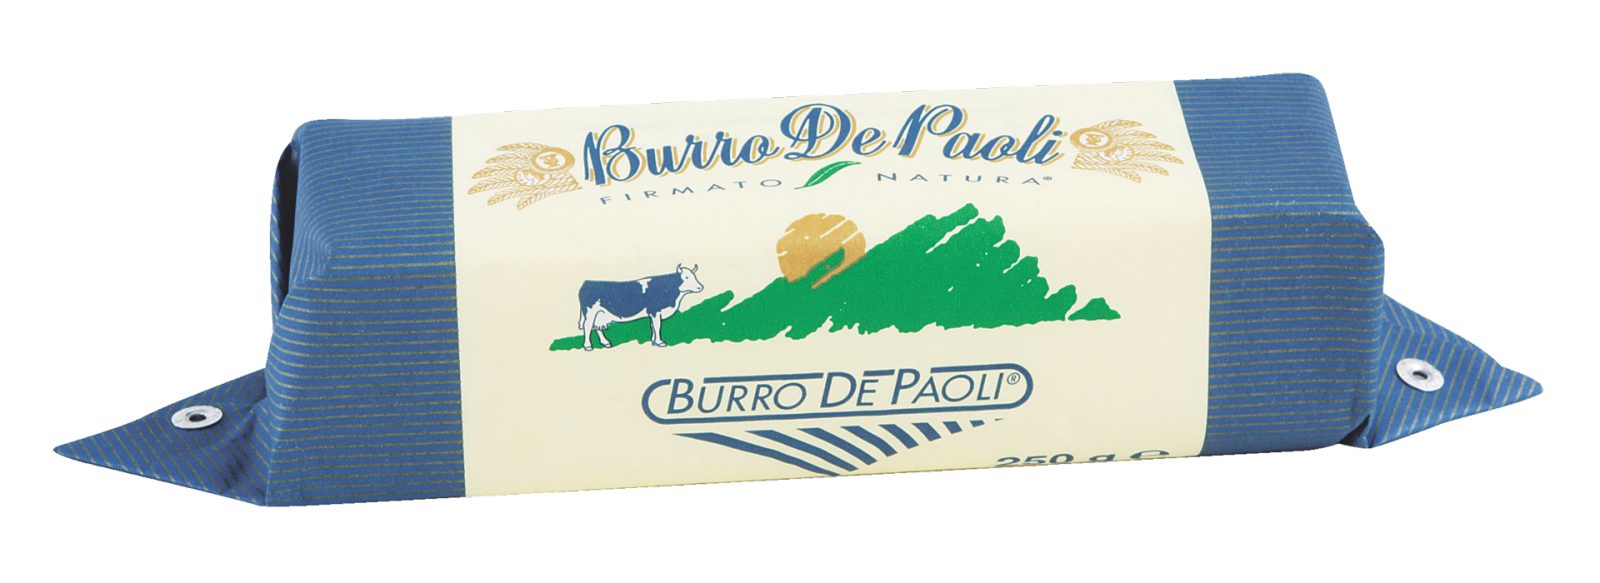 Burro 